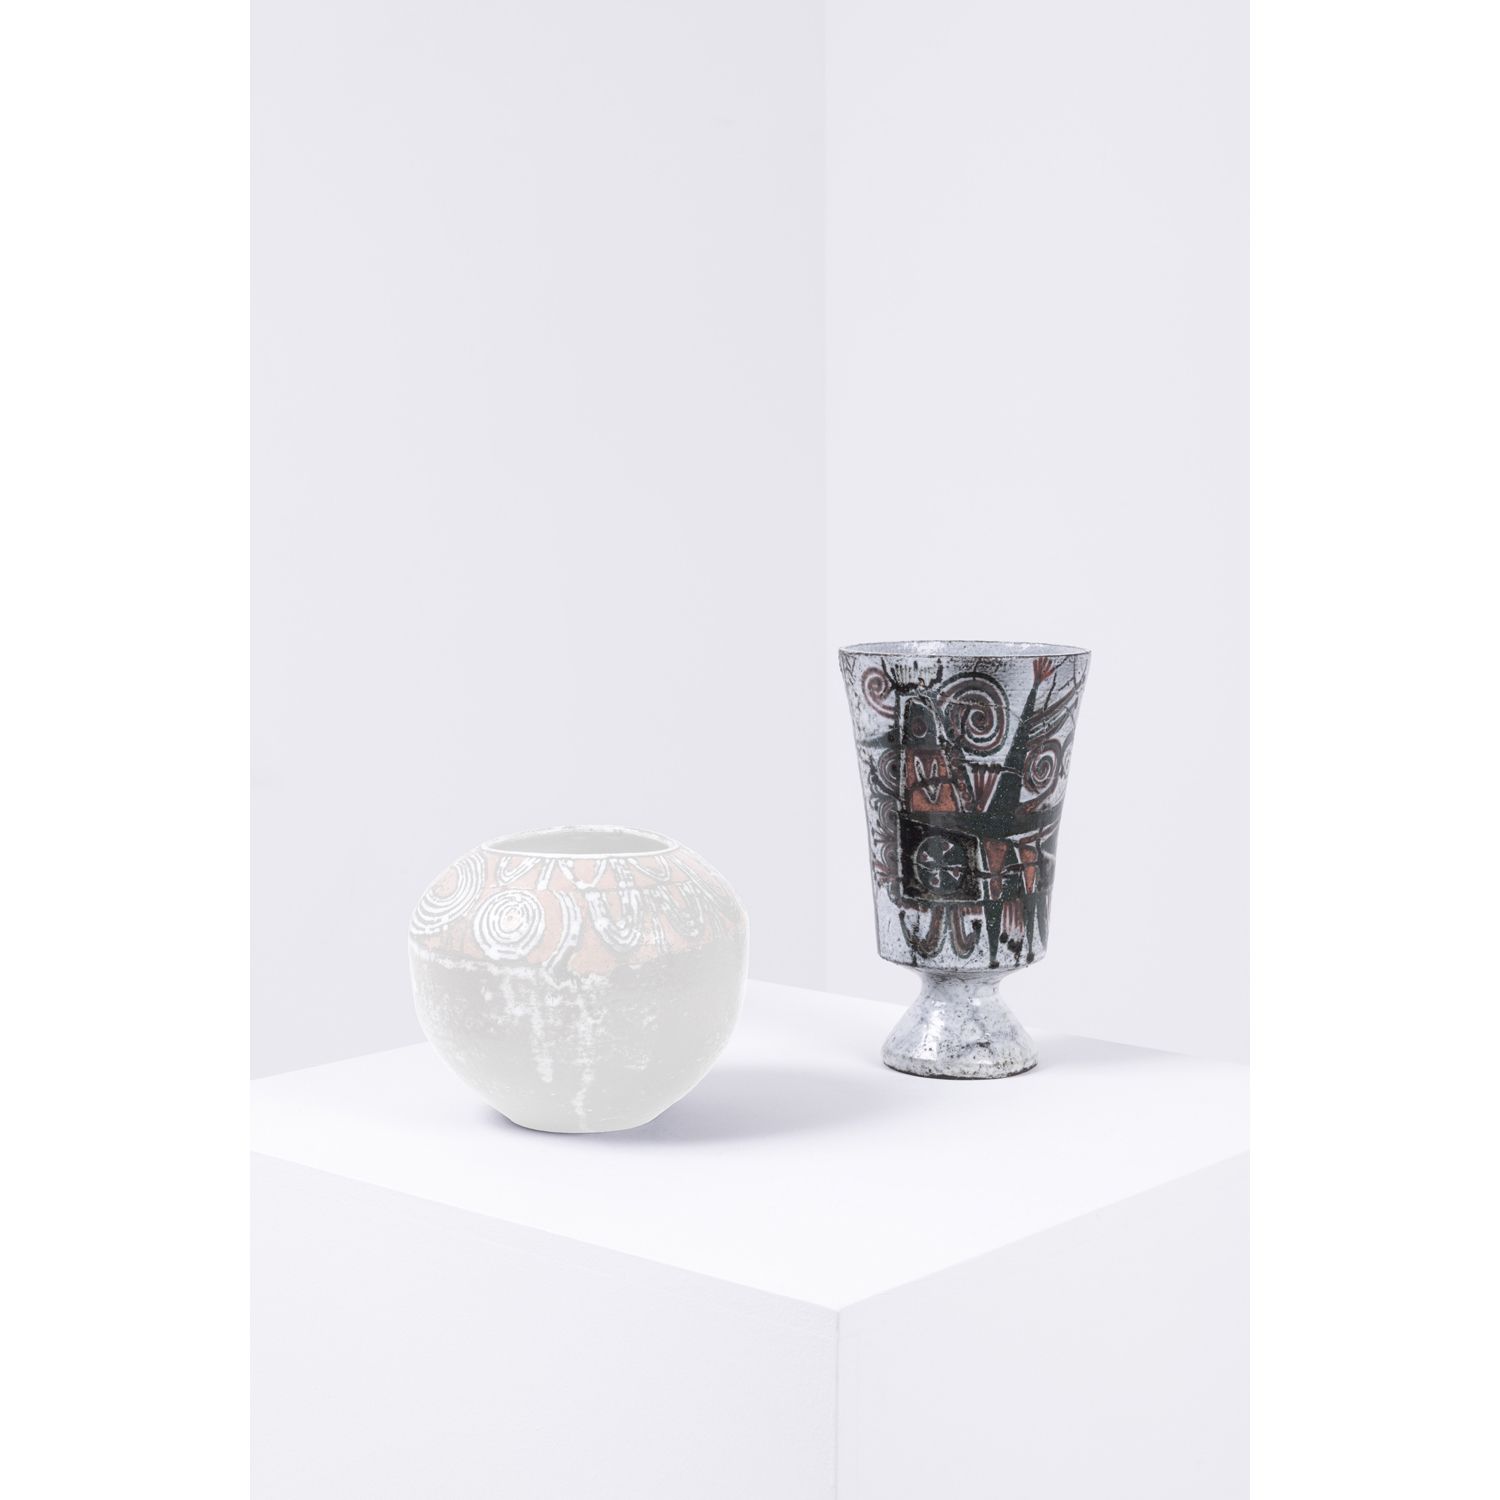 Jean Derval (1925-2010) Vase 让-德瓦尔(1925-2010)

花瓶

釉面陶瓷

1960年左右创建的模型

底座下有签名 "J&hellip;